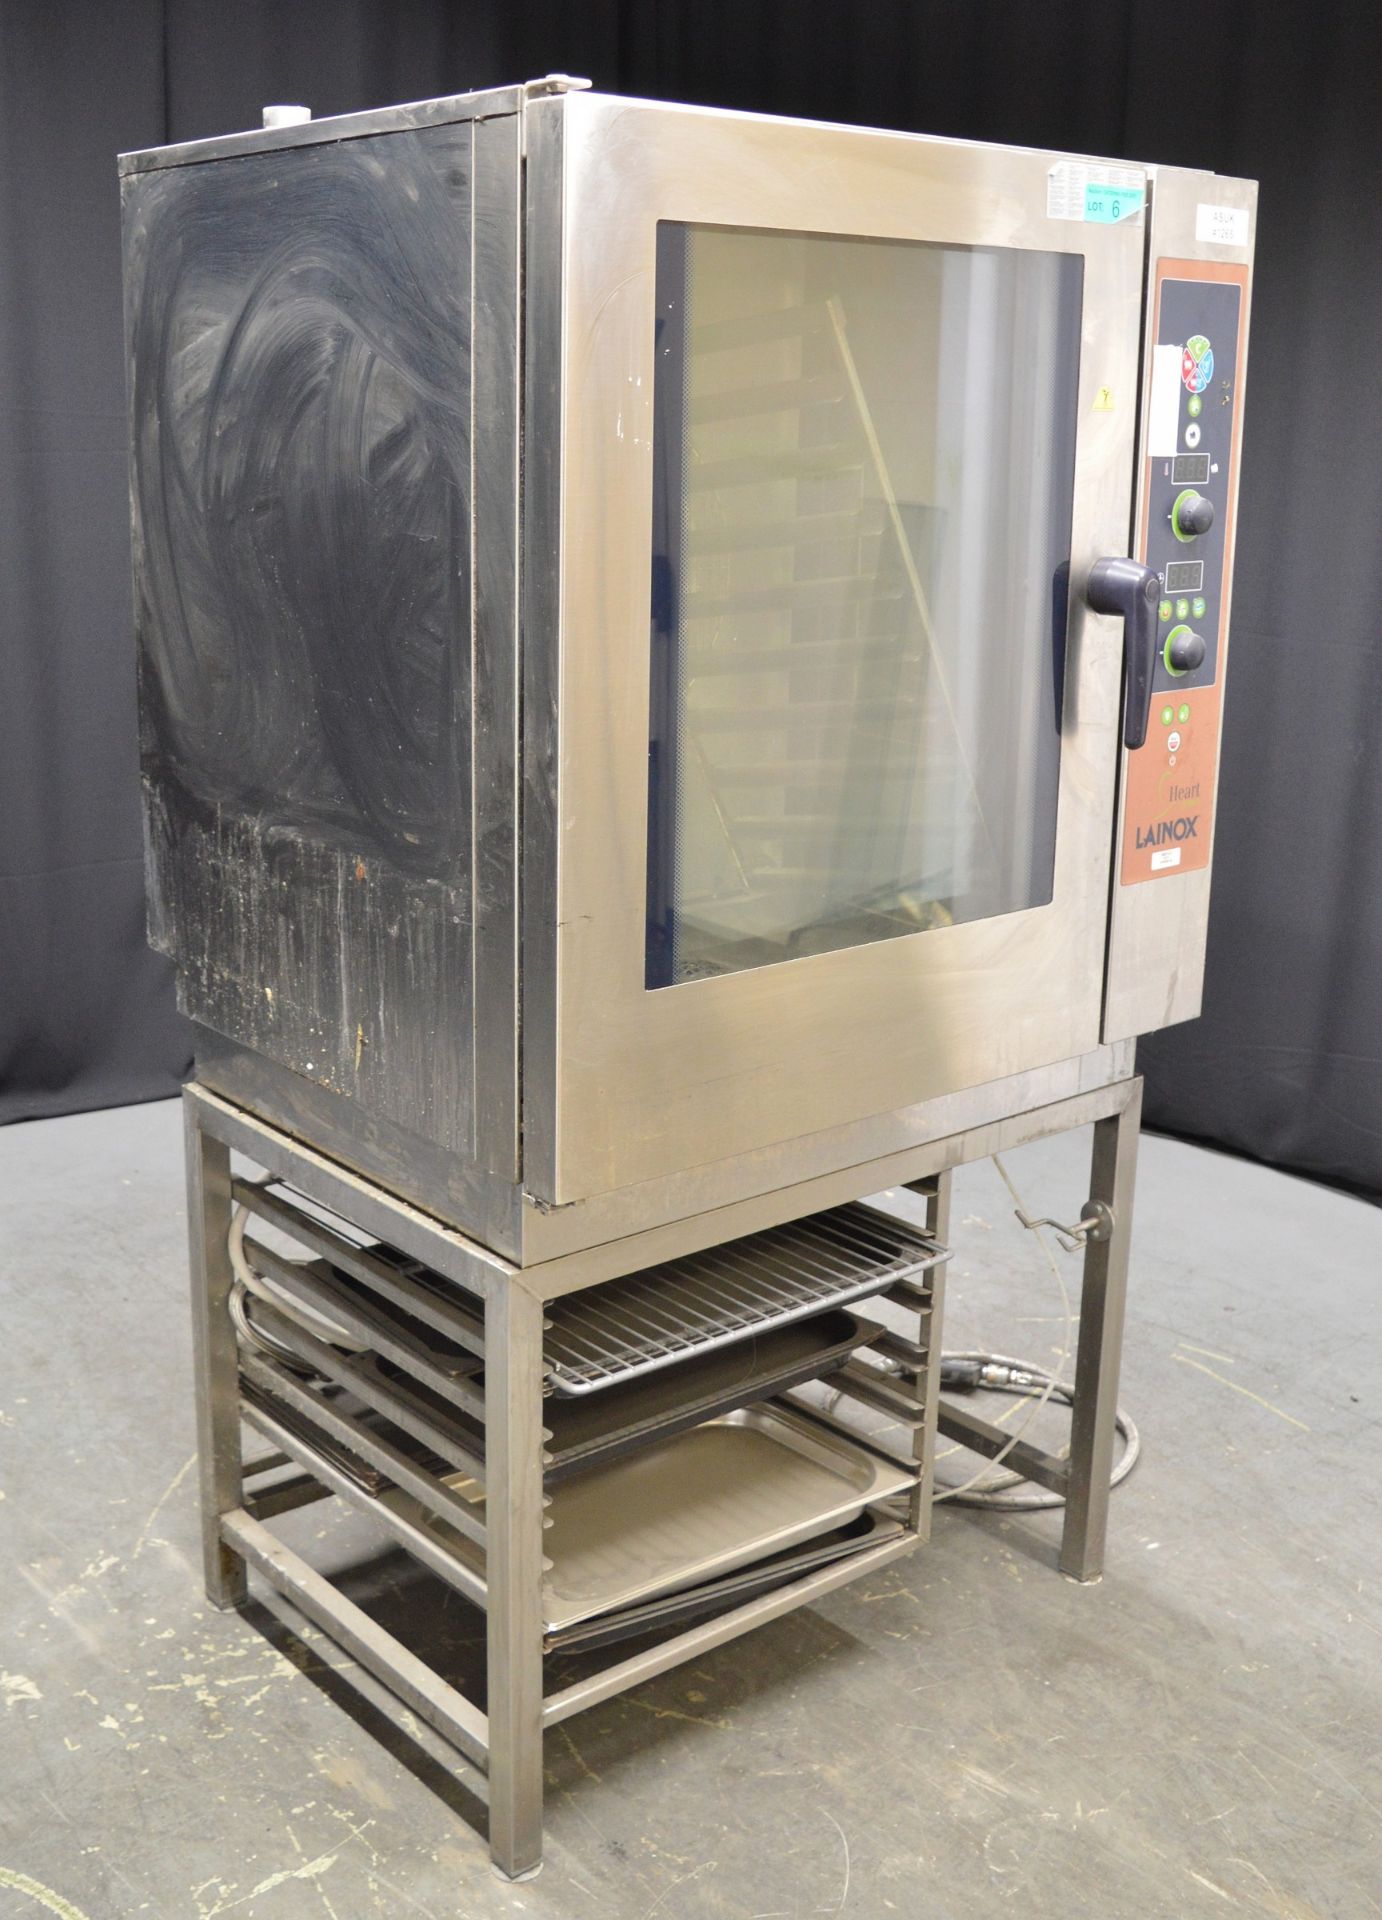 Lainox KME101S Electric Combi Oven - 400v - Image 2 of 11